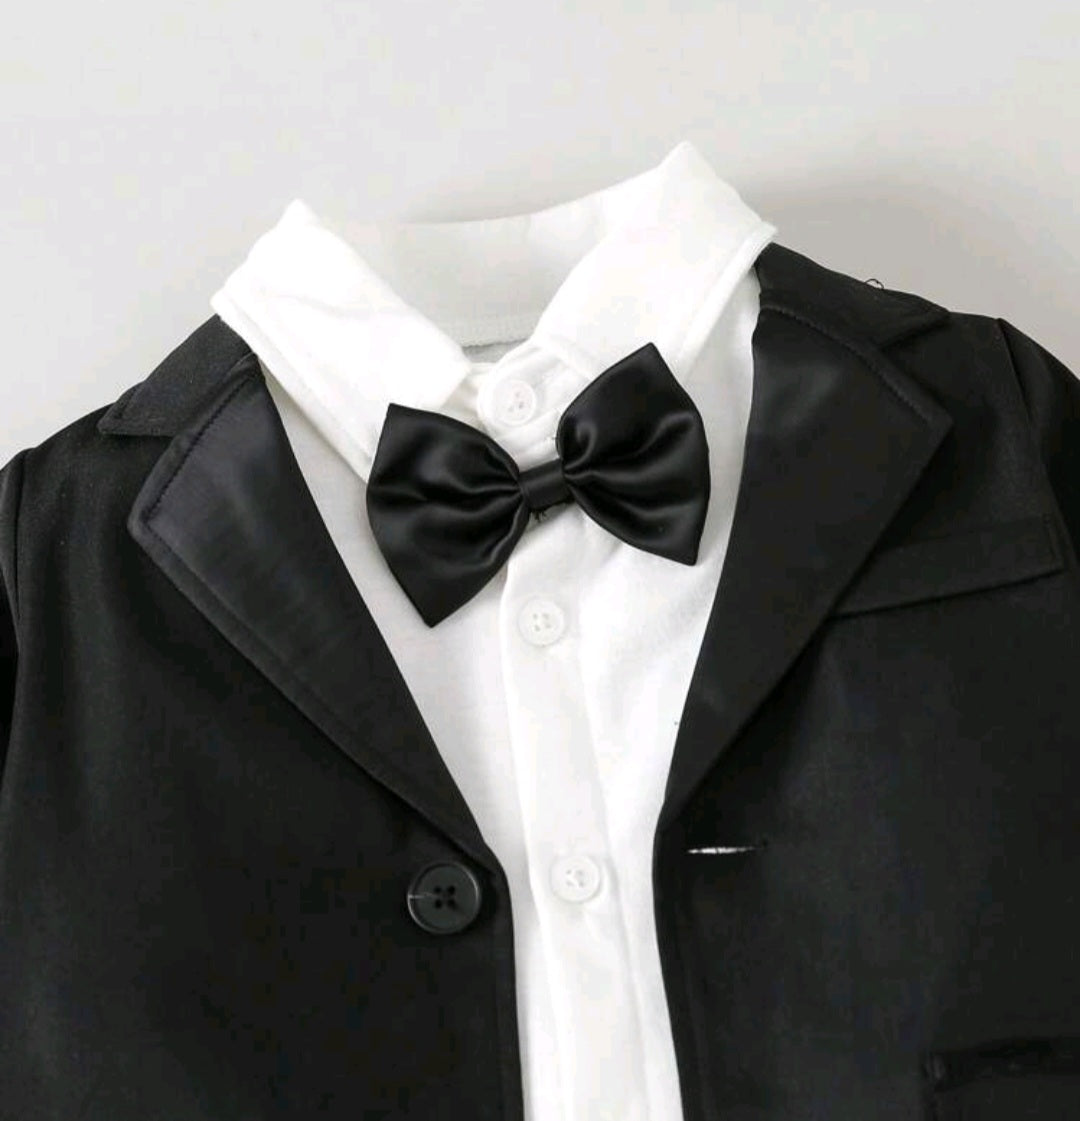 4PCS Gentleman Suit Black and White 